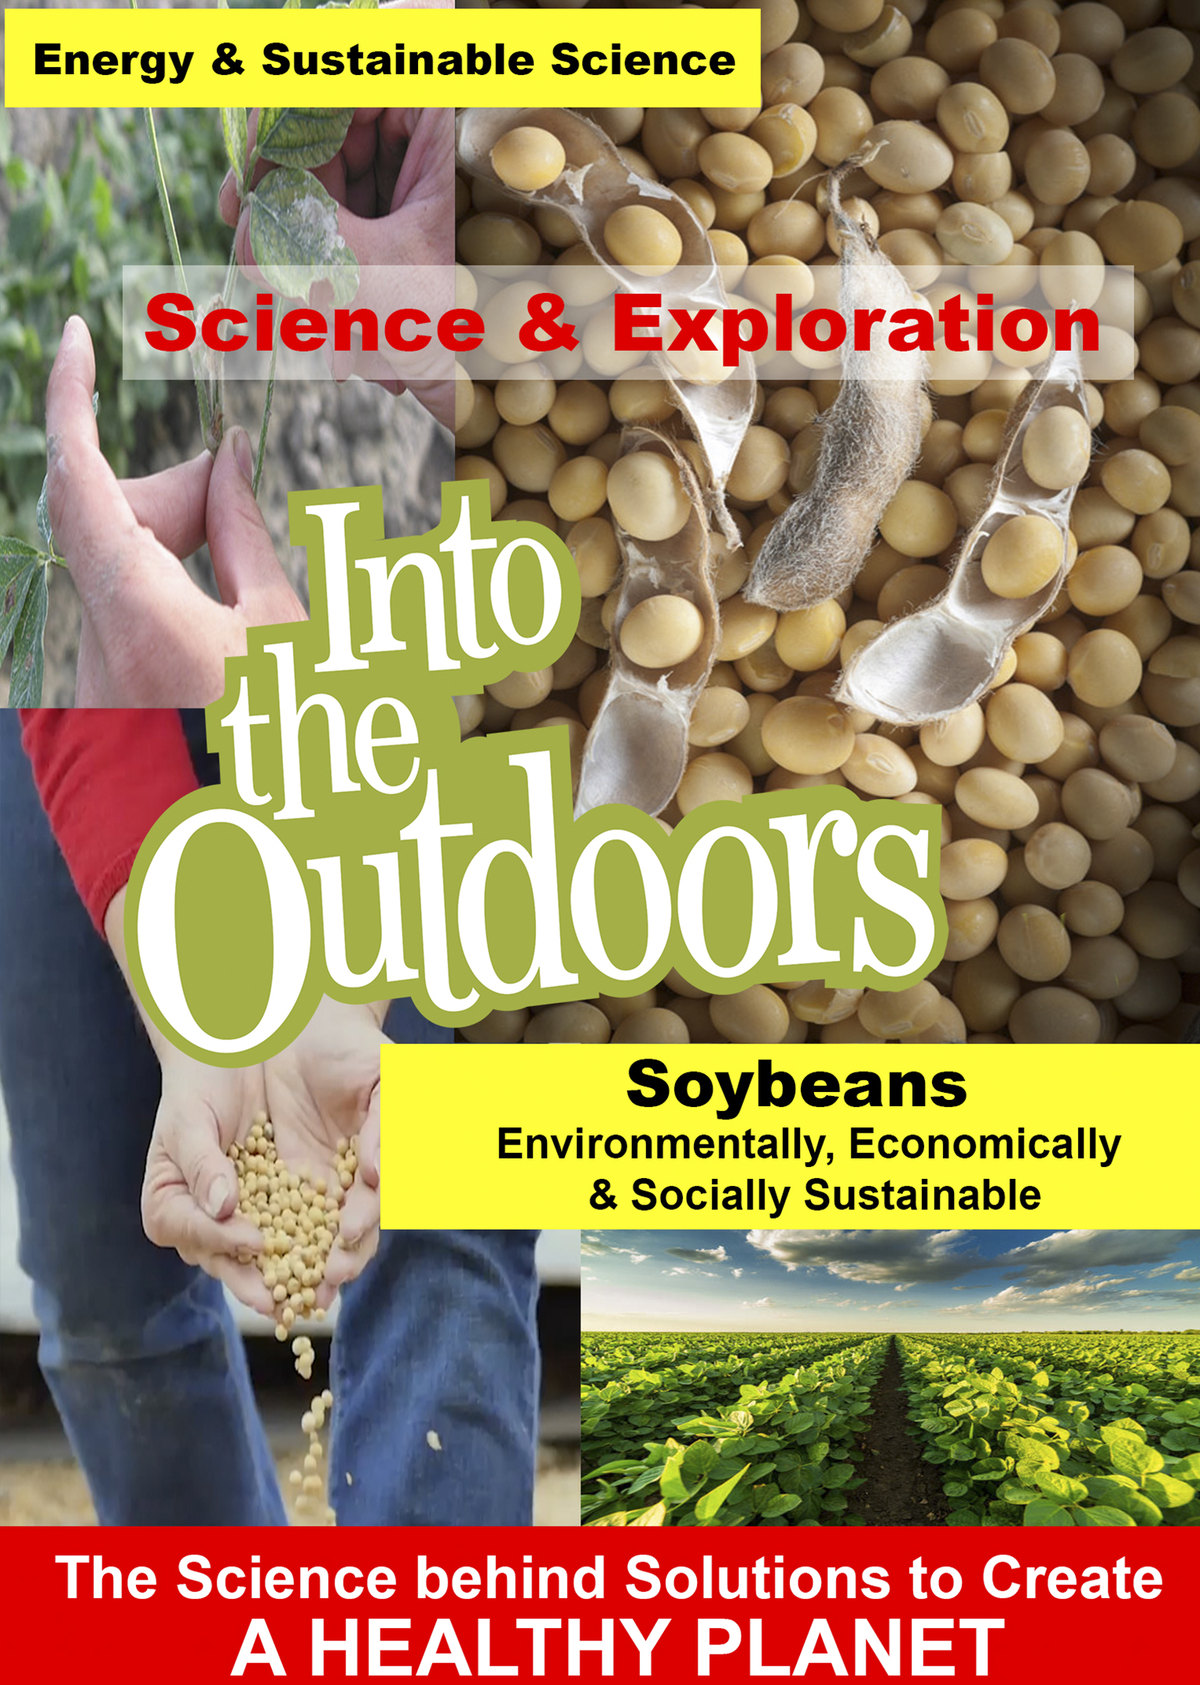 K4996 - Soybeans - Environmentally, Economically & Socially Sustainable